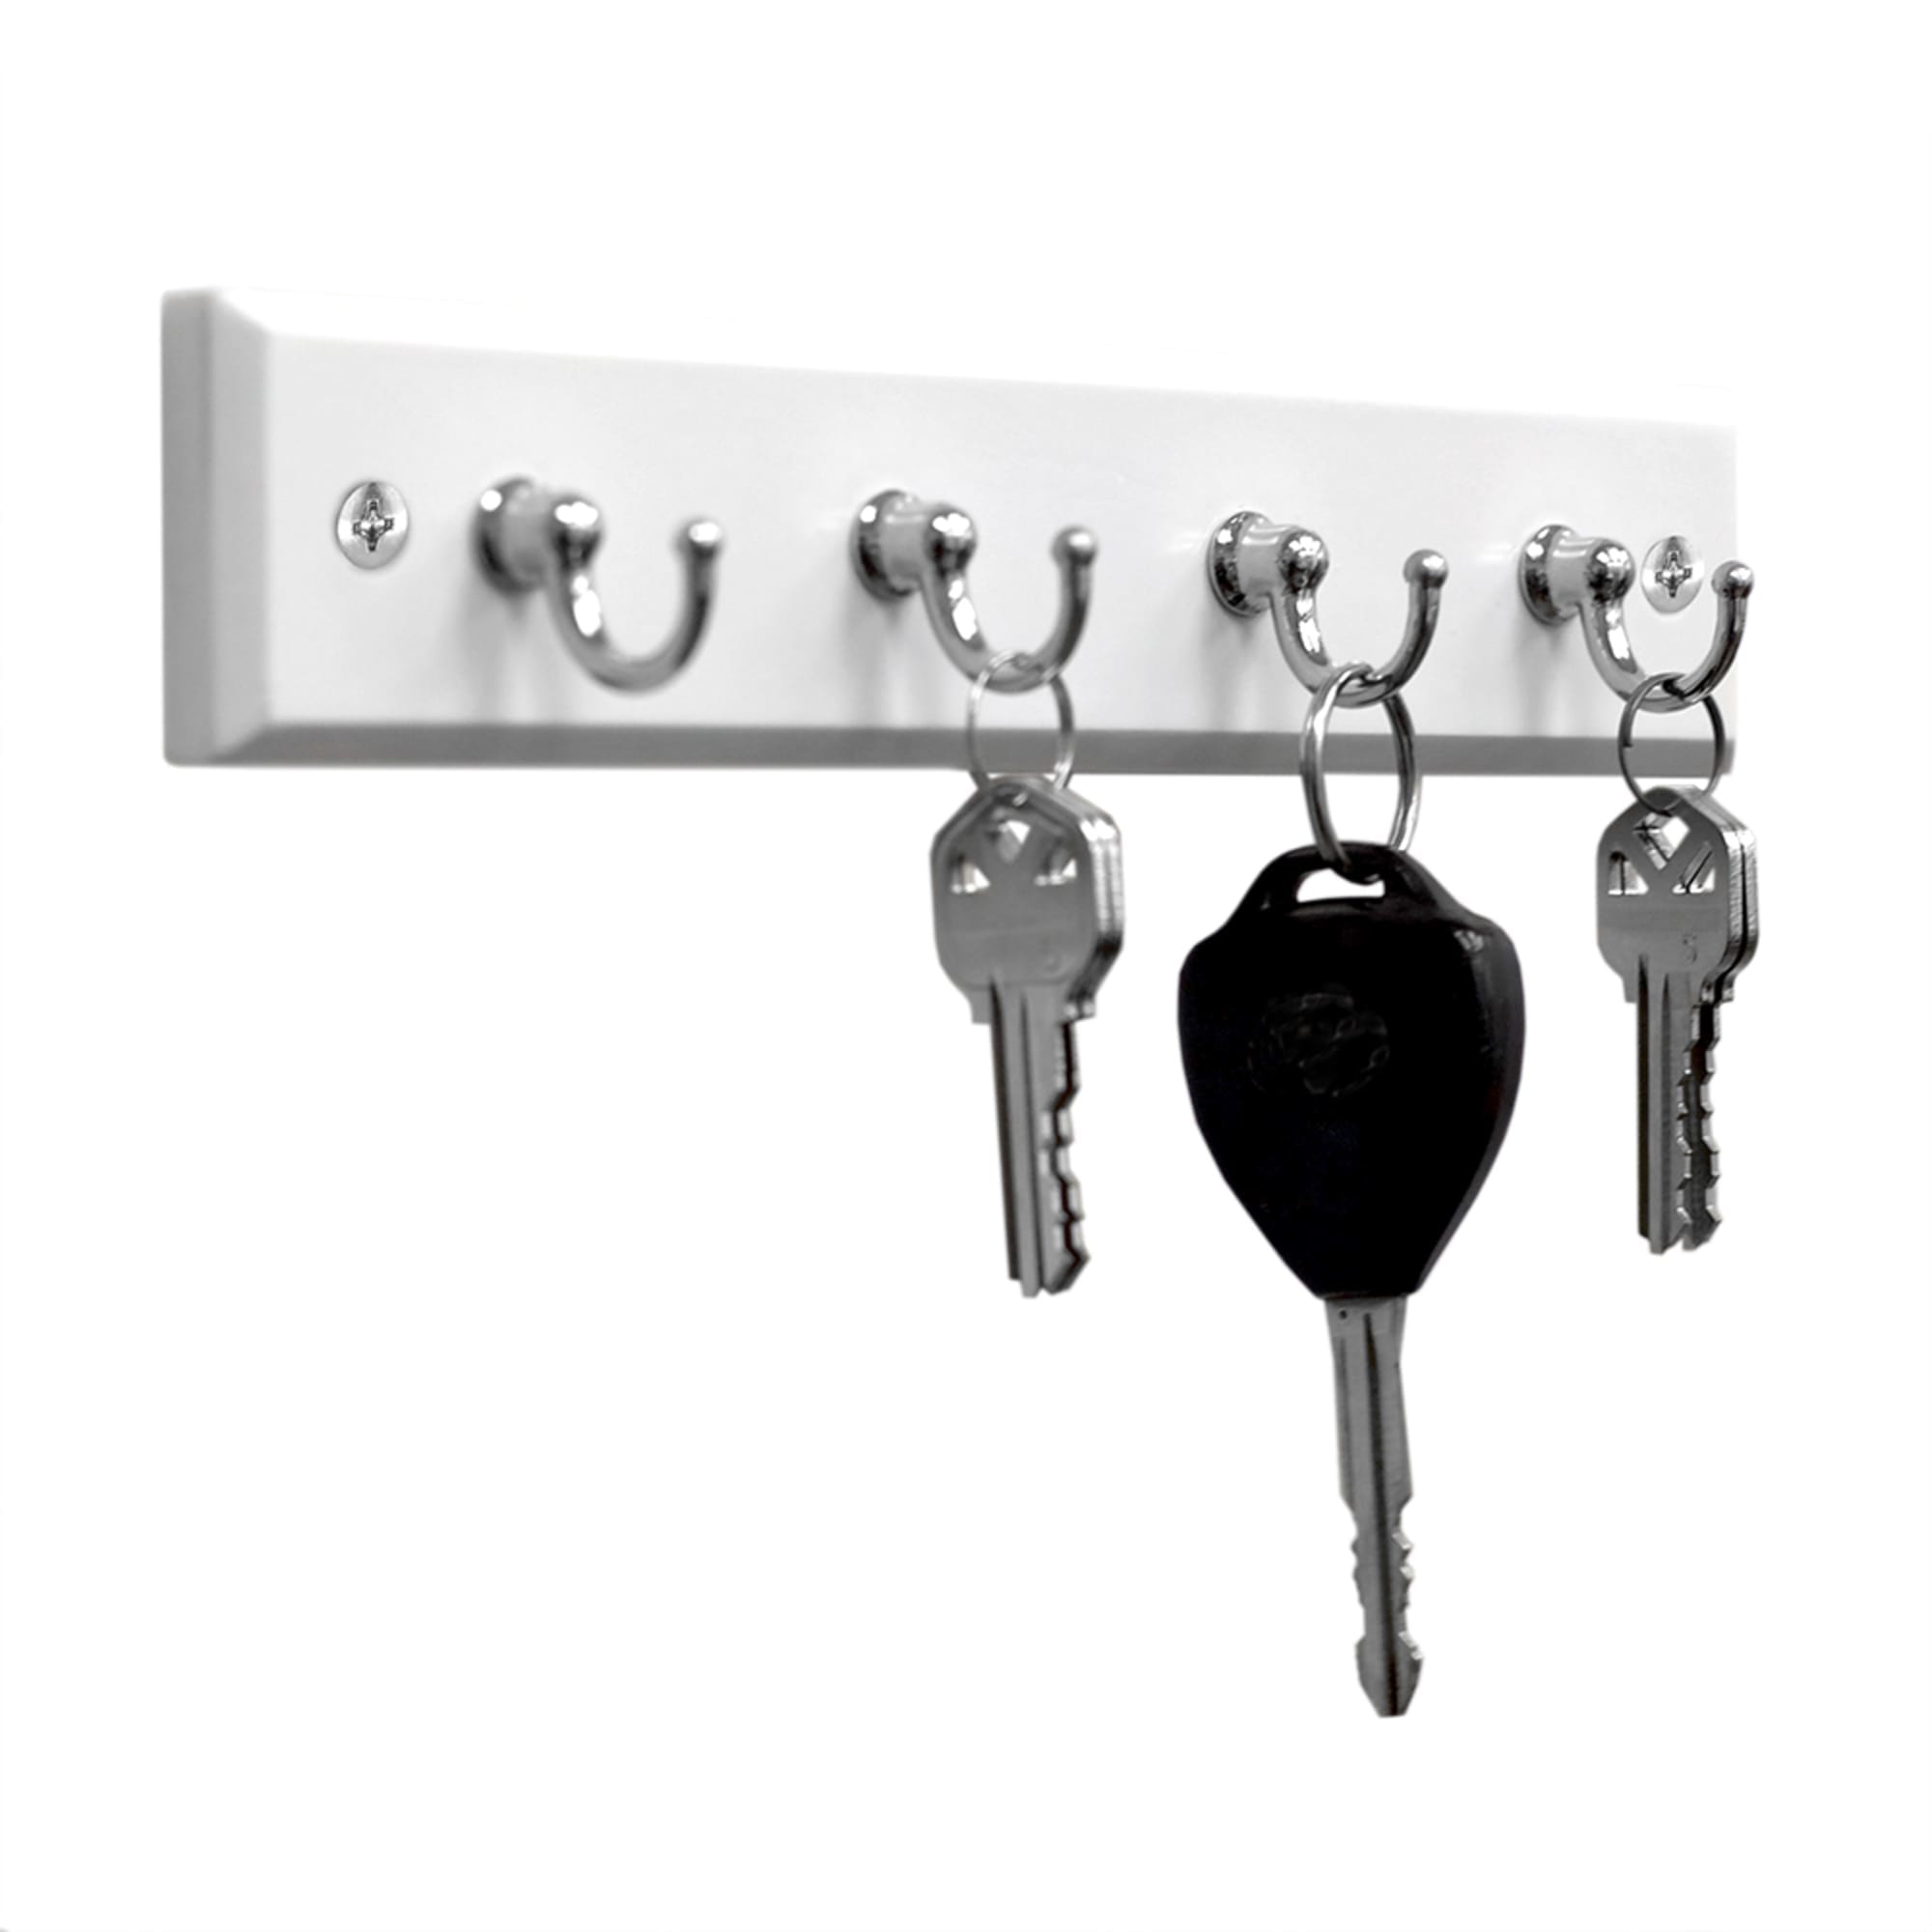 Naumoo Wooden Key Holder for Wall with Shelf, 4 Double Key Hooks (White)